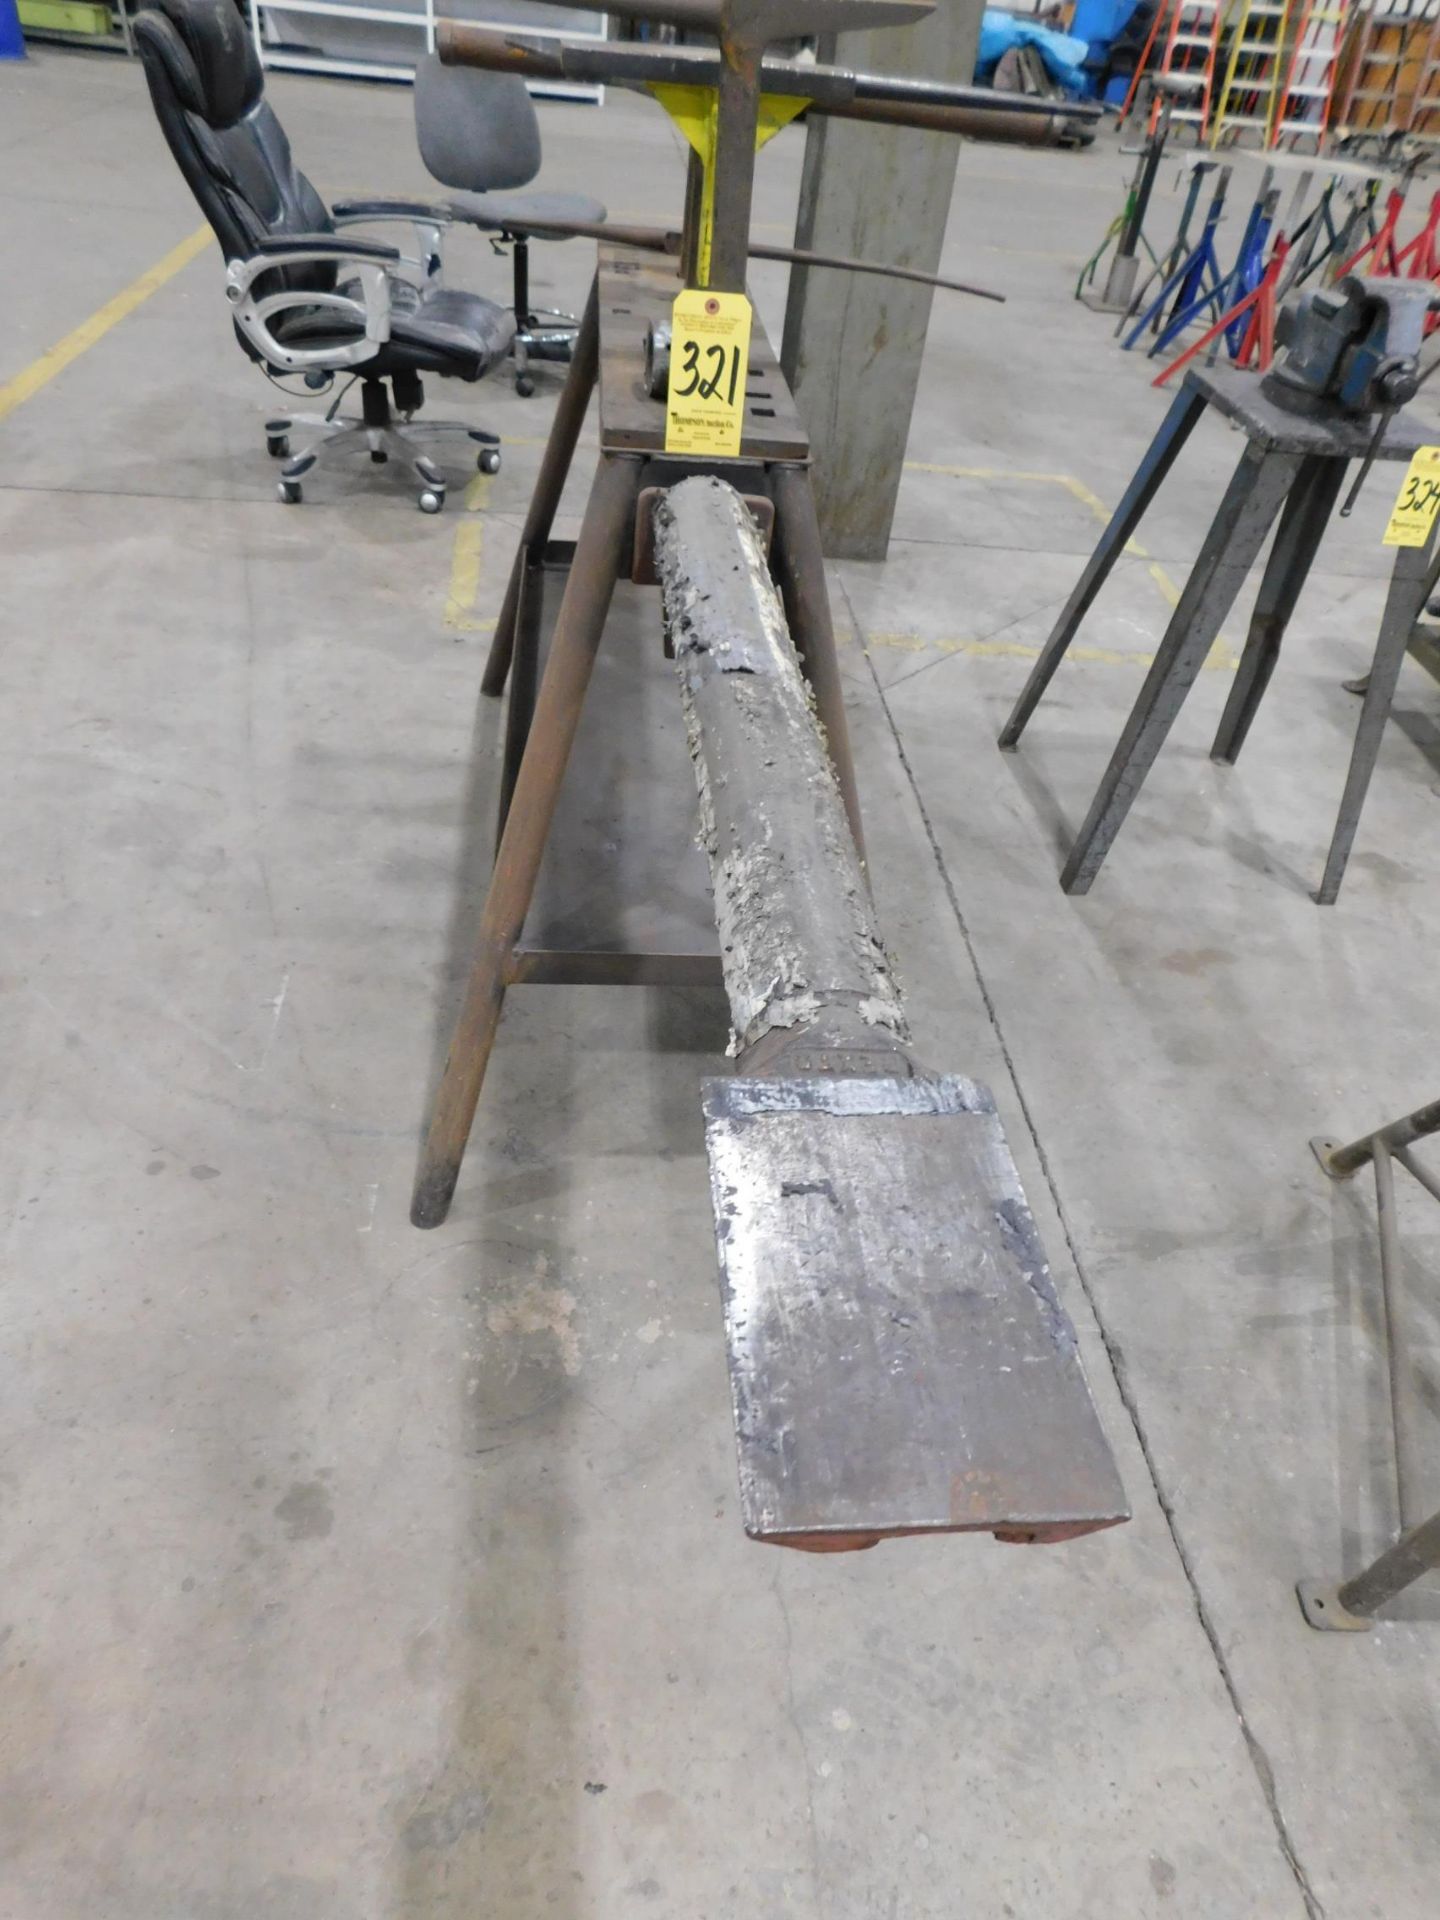 Pexto Metal Fabricators Bench with Blacksmith Tools - Image 2 of 6